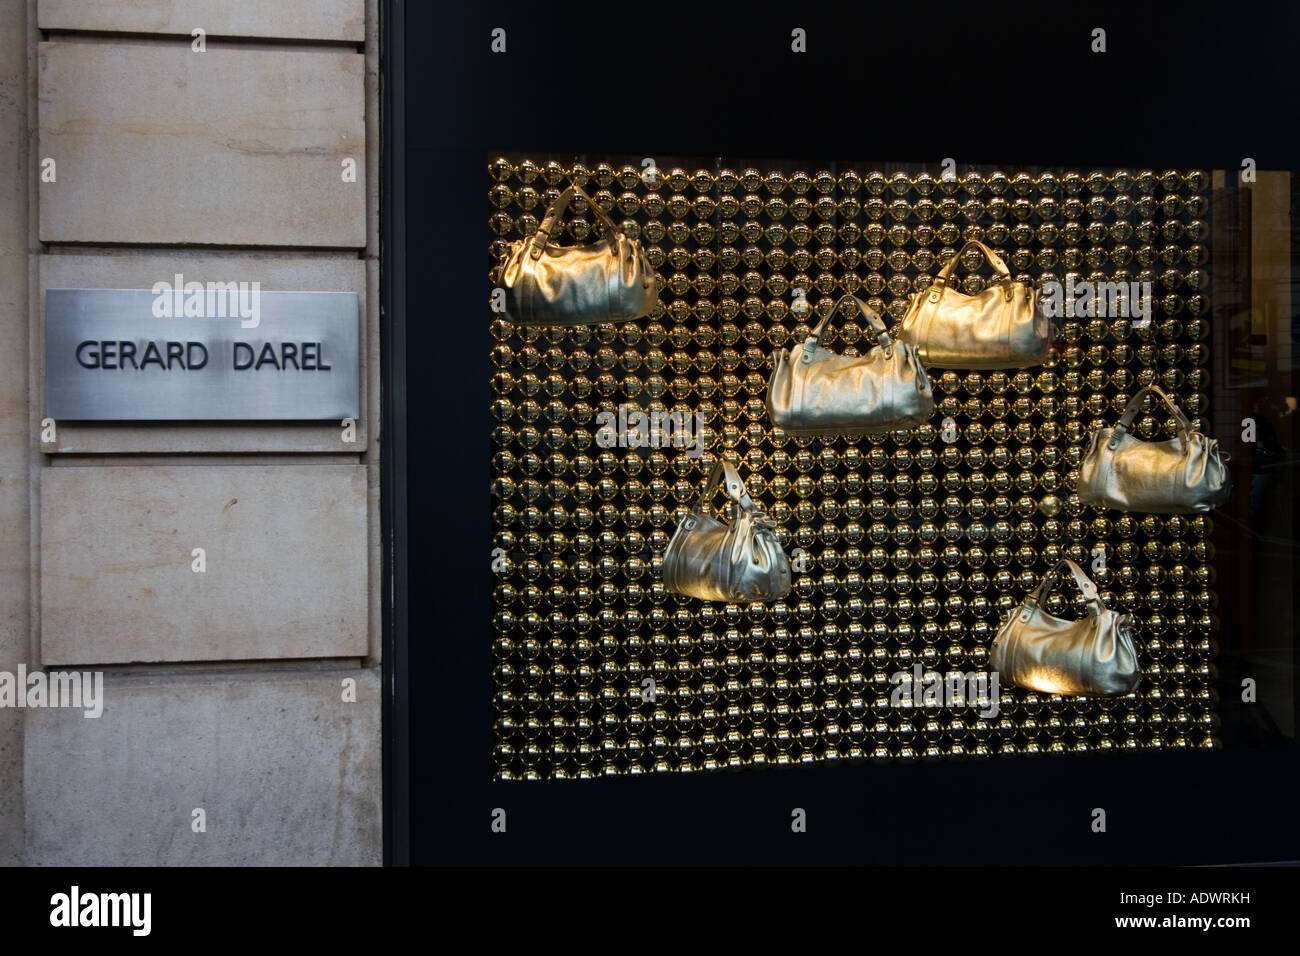 Gerard Darel shop window in Boulevard Saint Germain Paris France Stock Photo